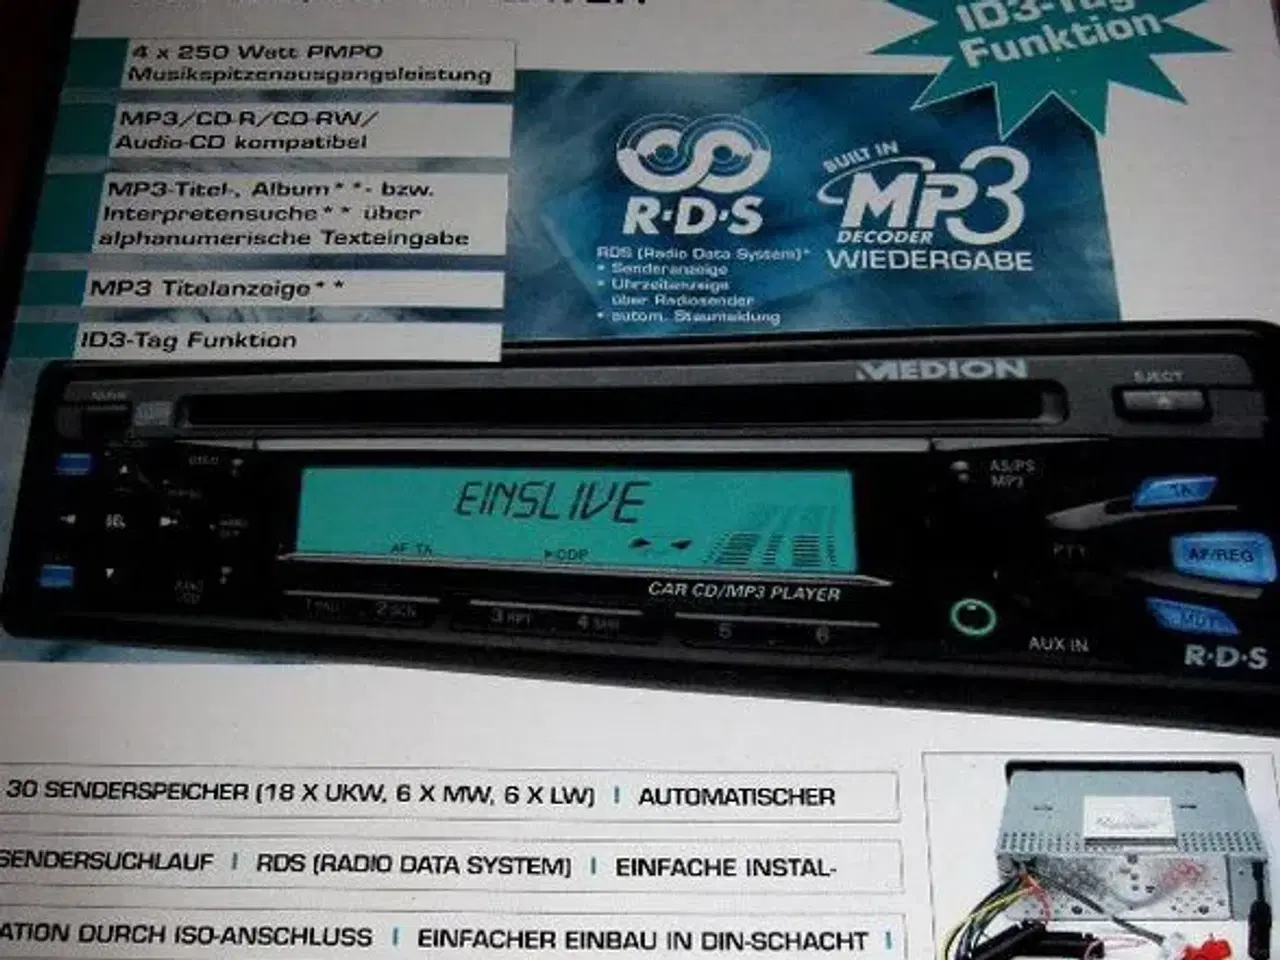 Billede 2 - Ny Autoradio med CD/MP3 afspiller.